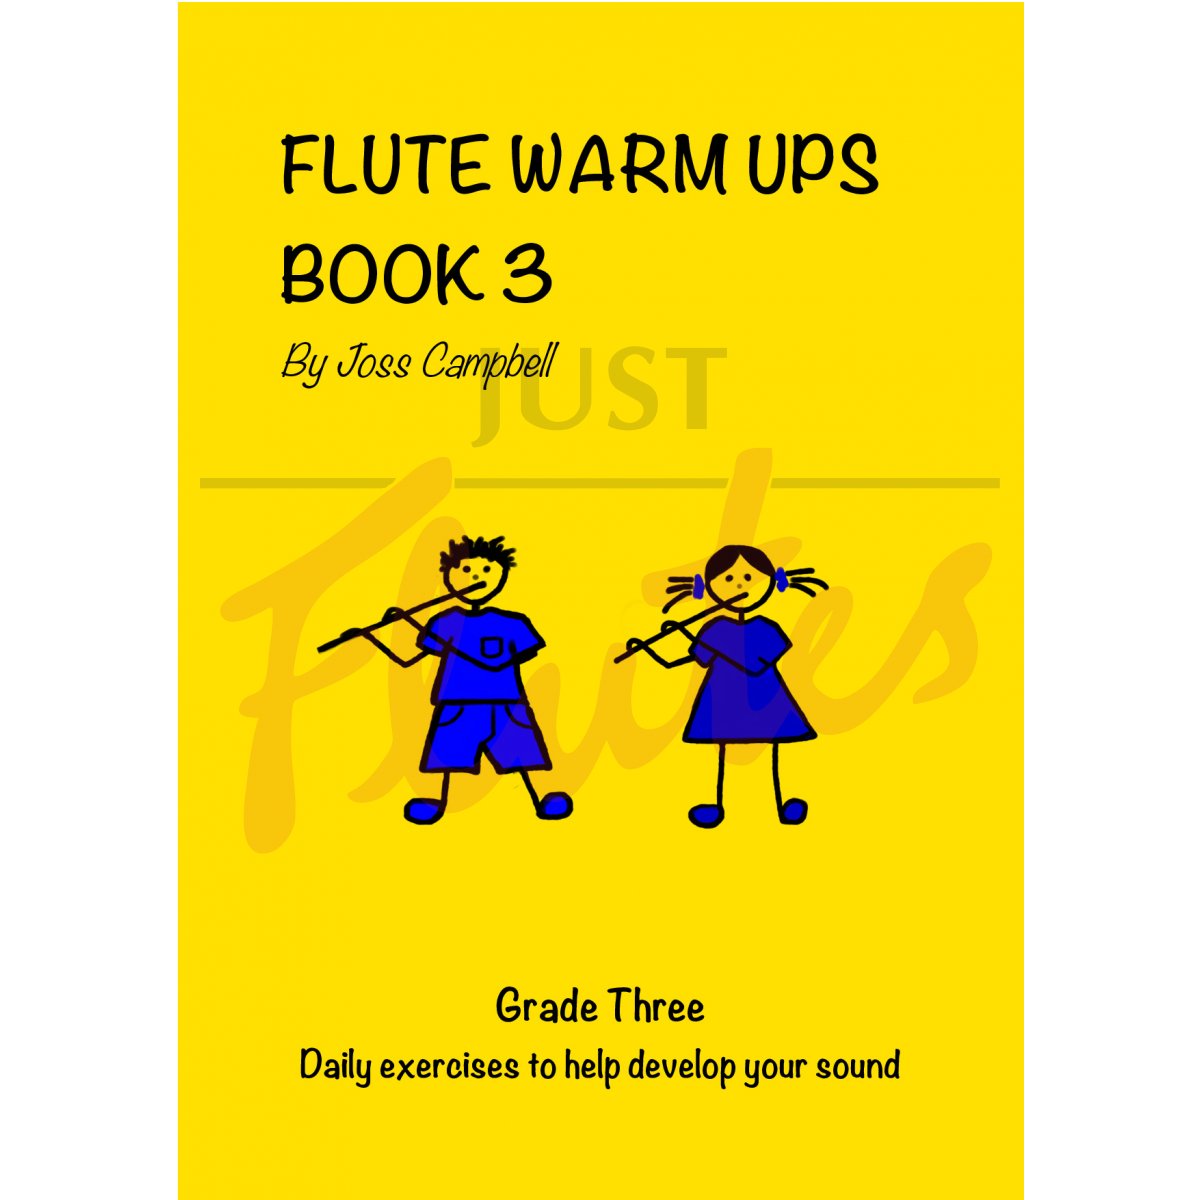 Flute Warm Ups Book 3